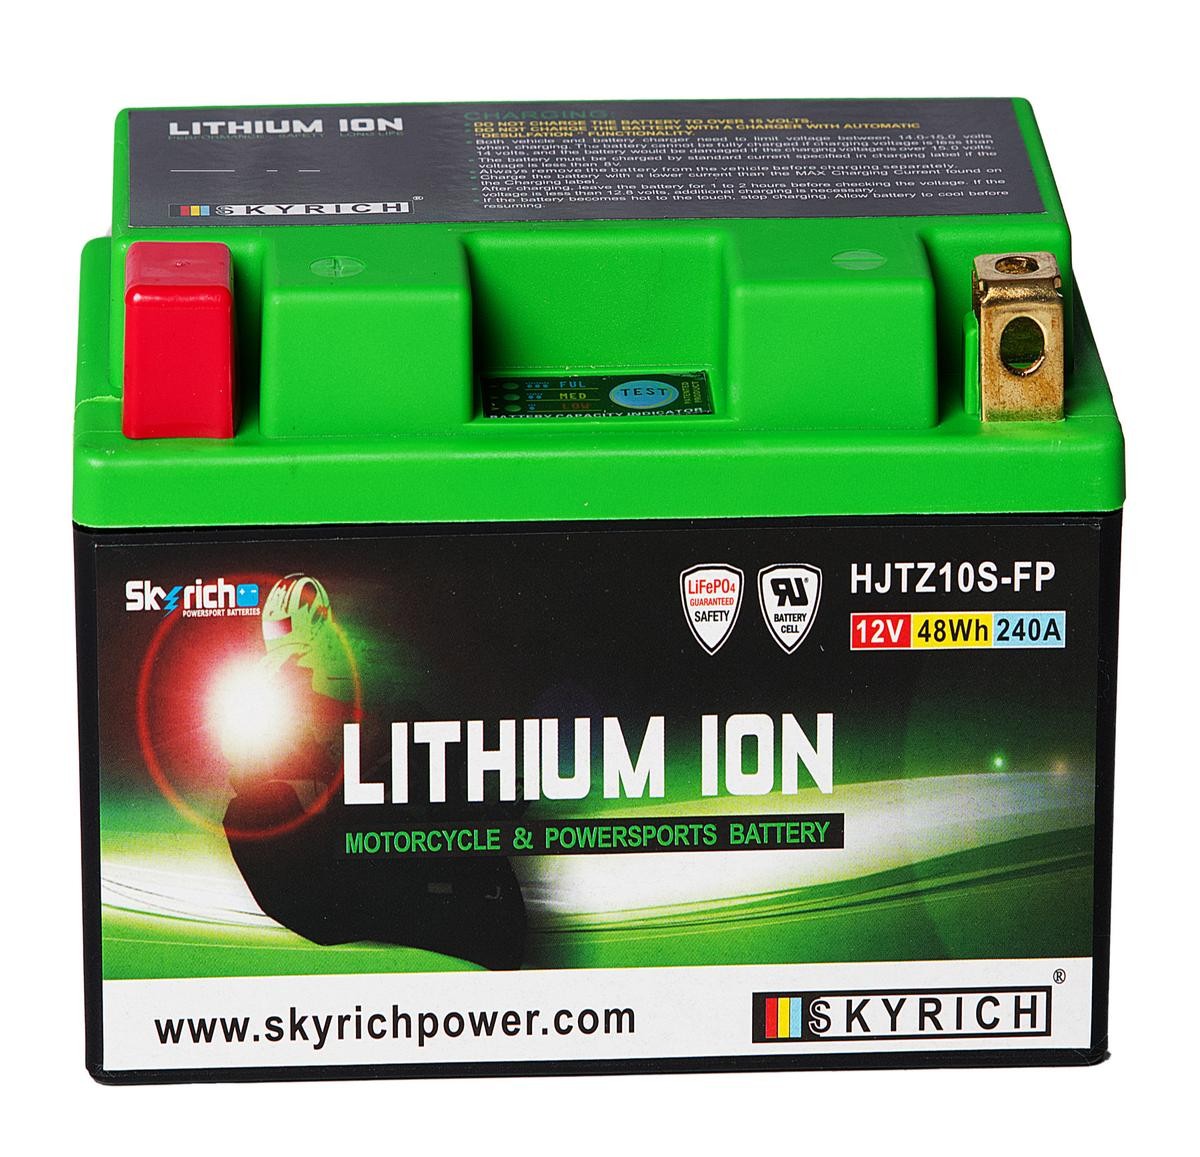 KTM HARD ENDURO Batterie 12V 4Ah 240A N Li-Ionen-Batterie SKYRICH LITHIUM ION HJTZ10S-FP